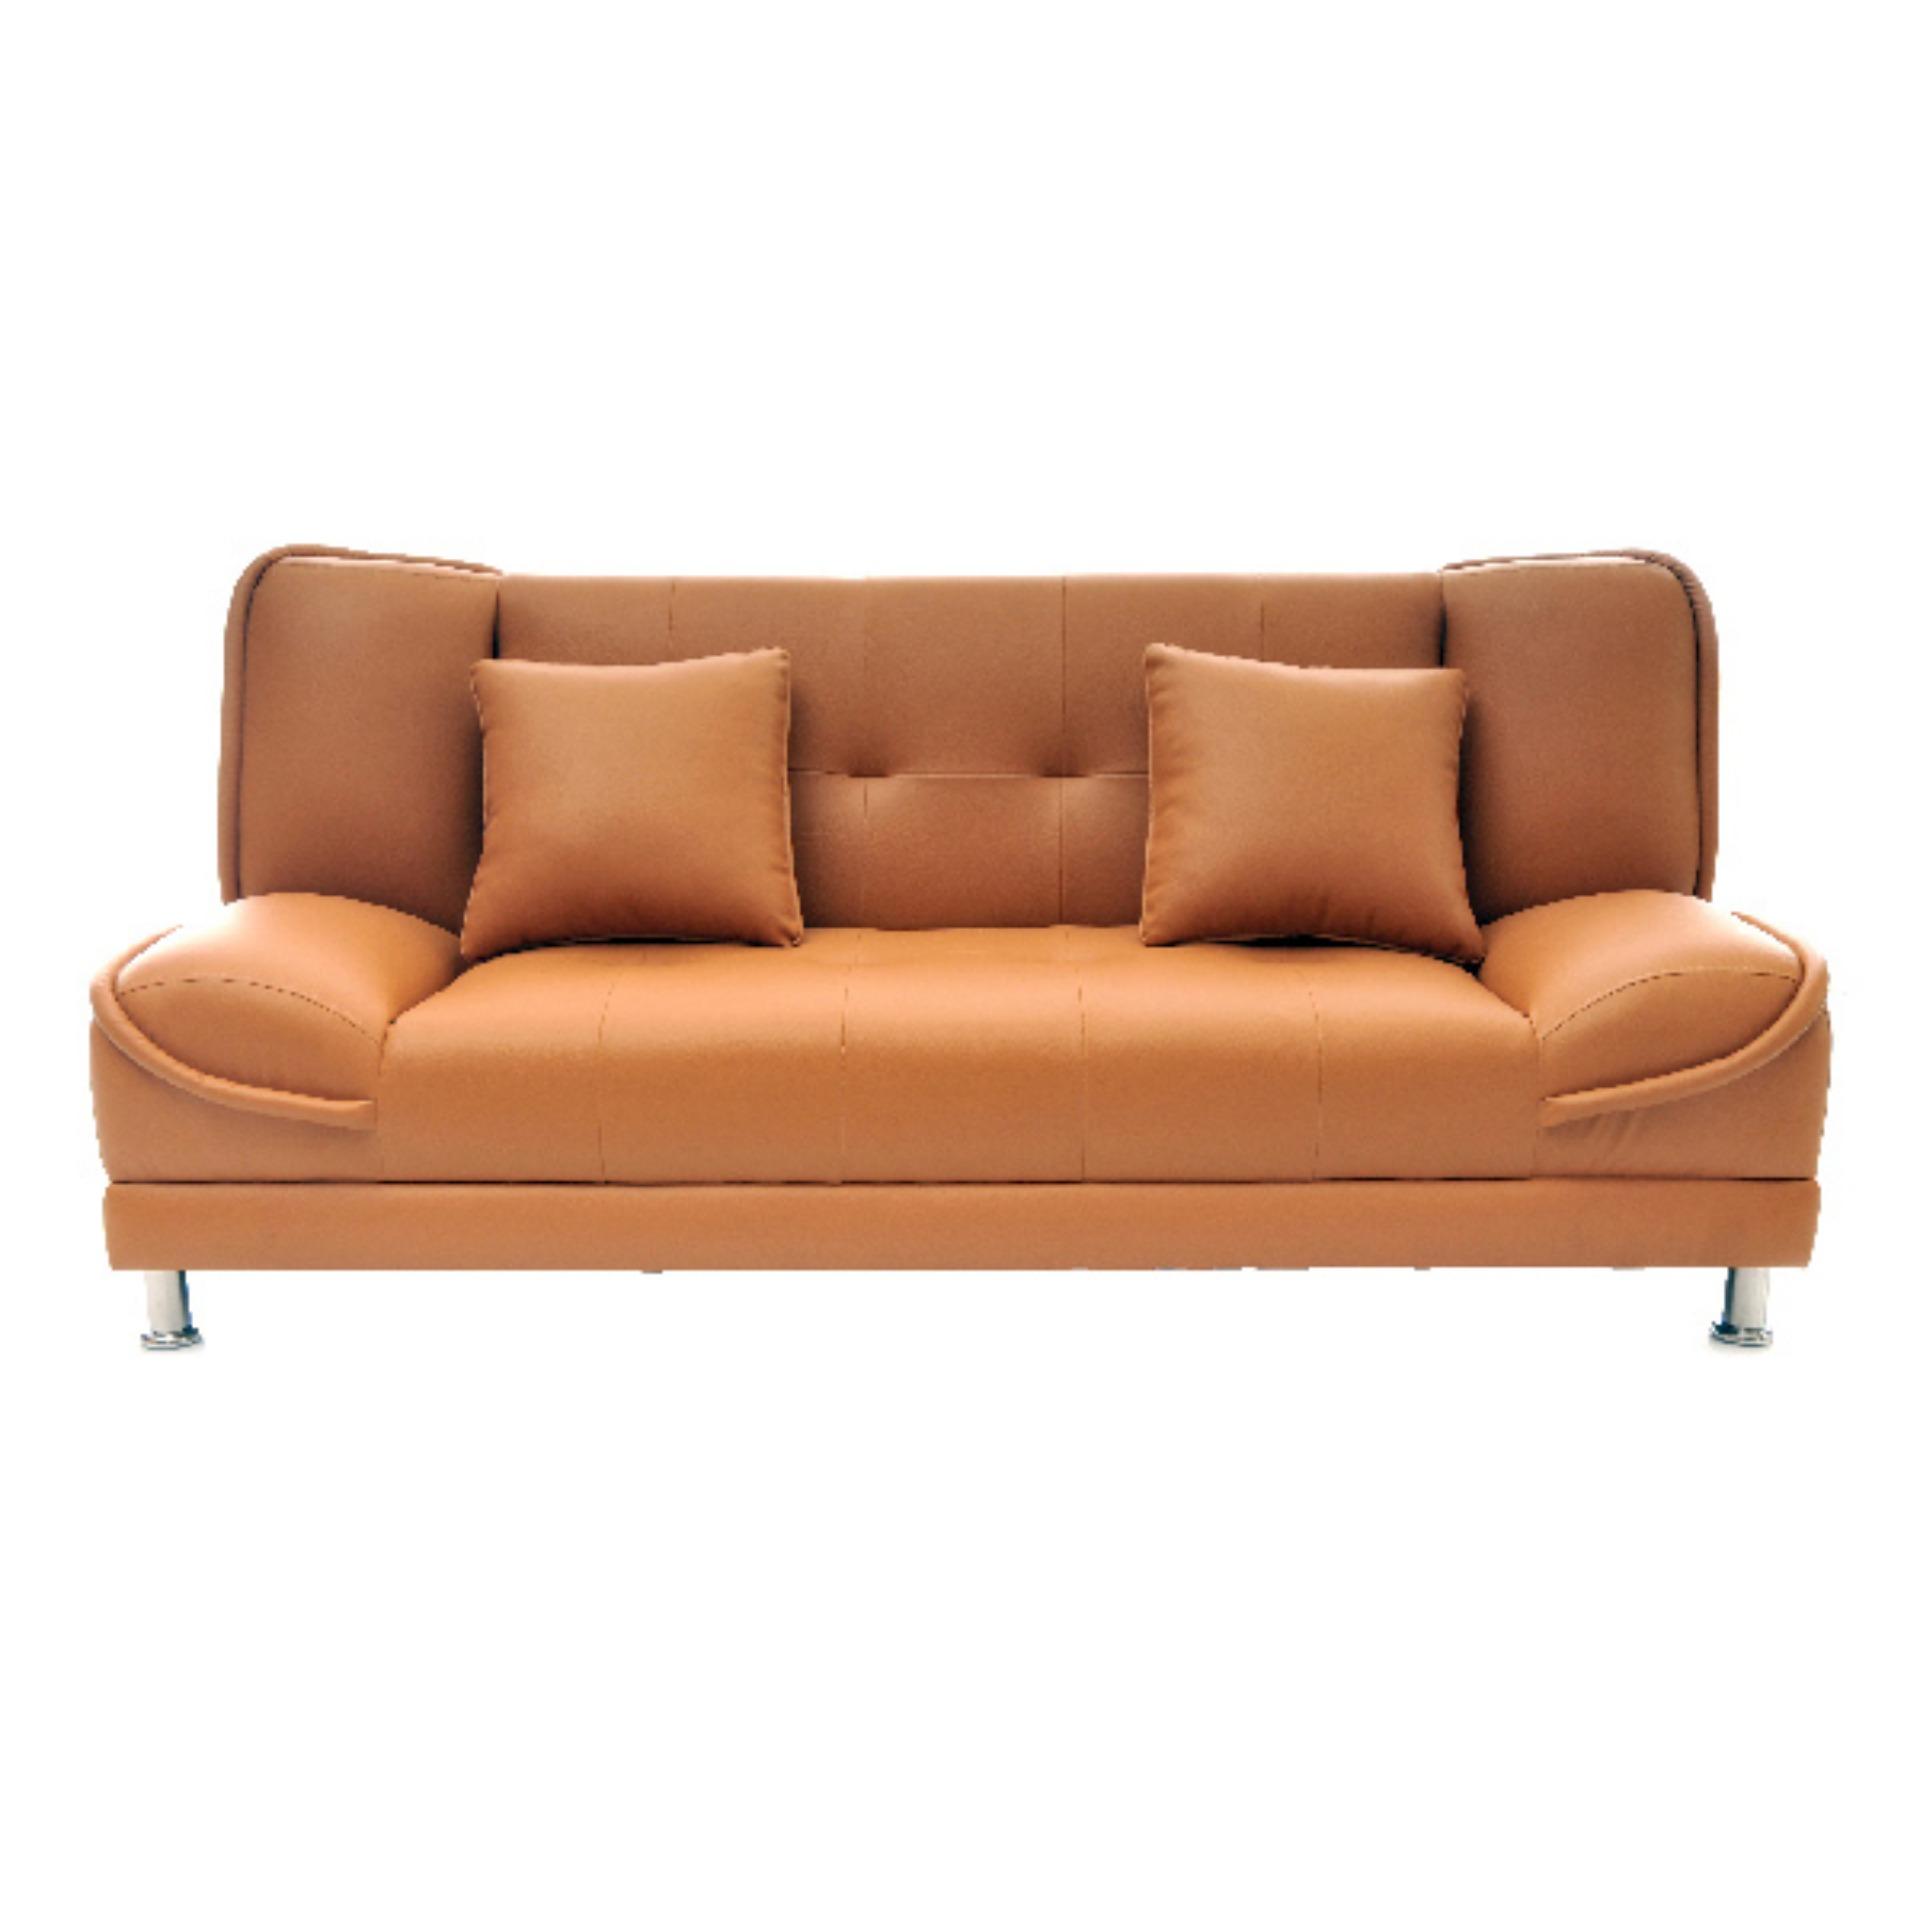 Gambar Sofa  Bed Minimalis Lazada  Homkonsep